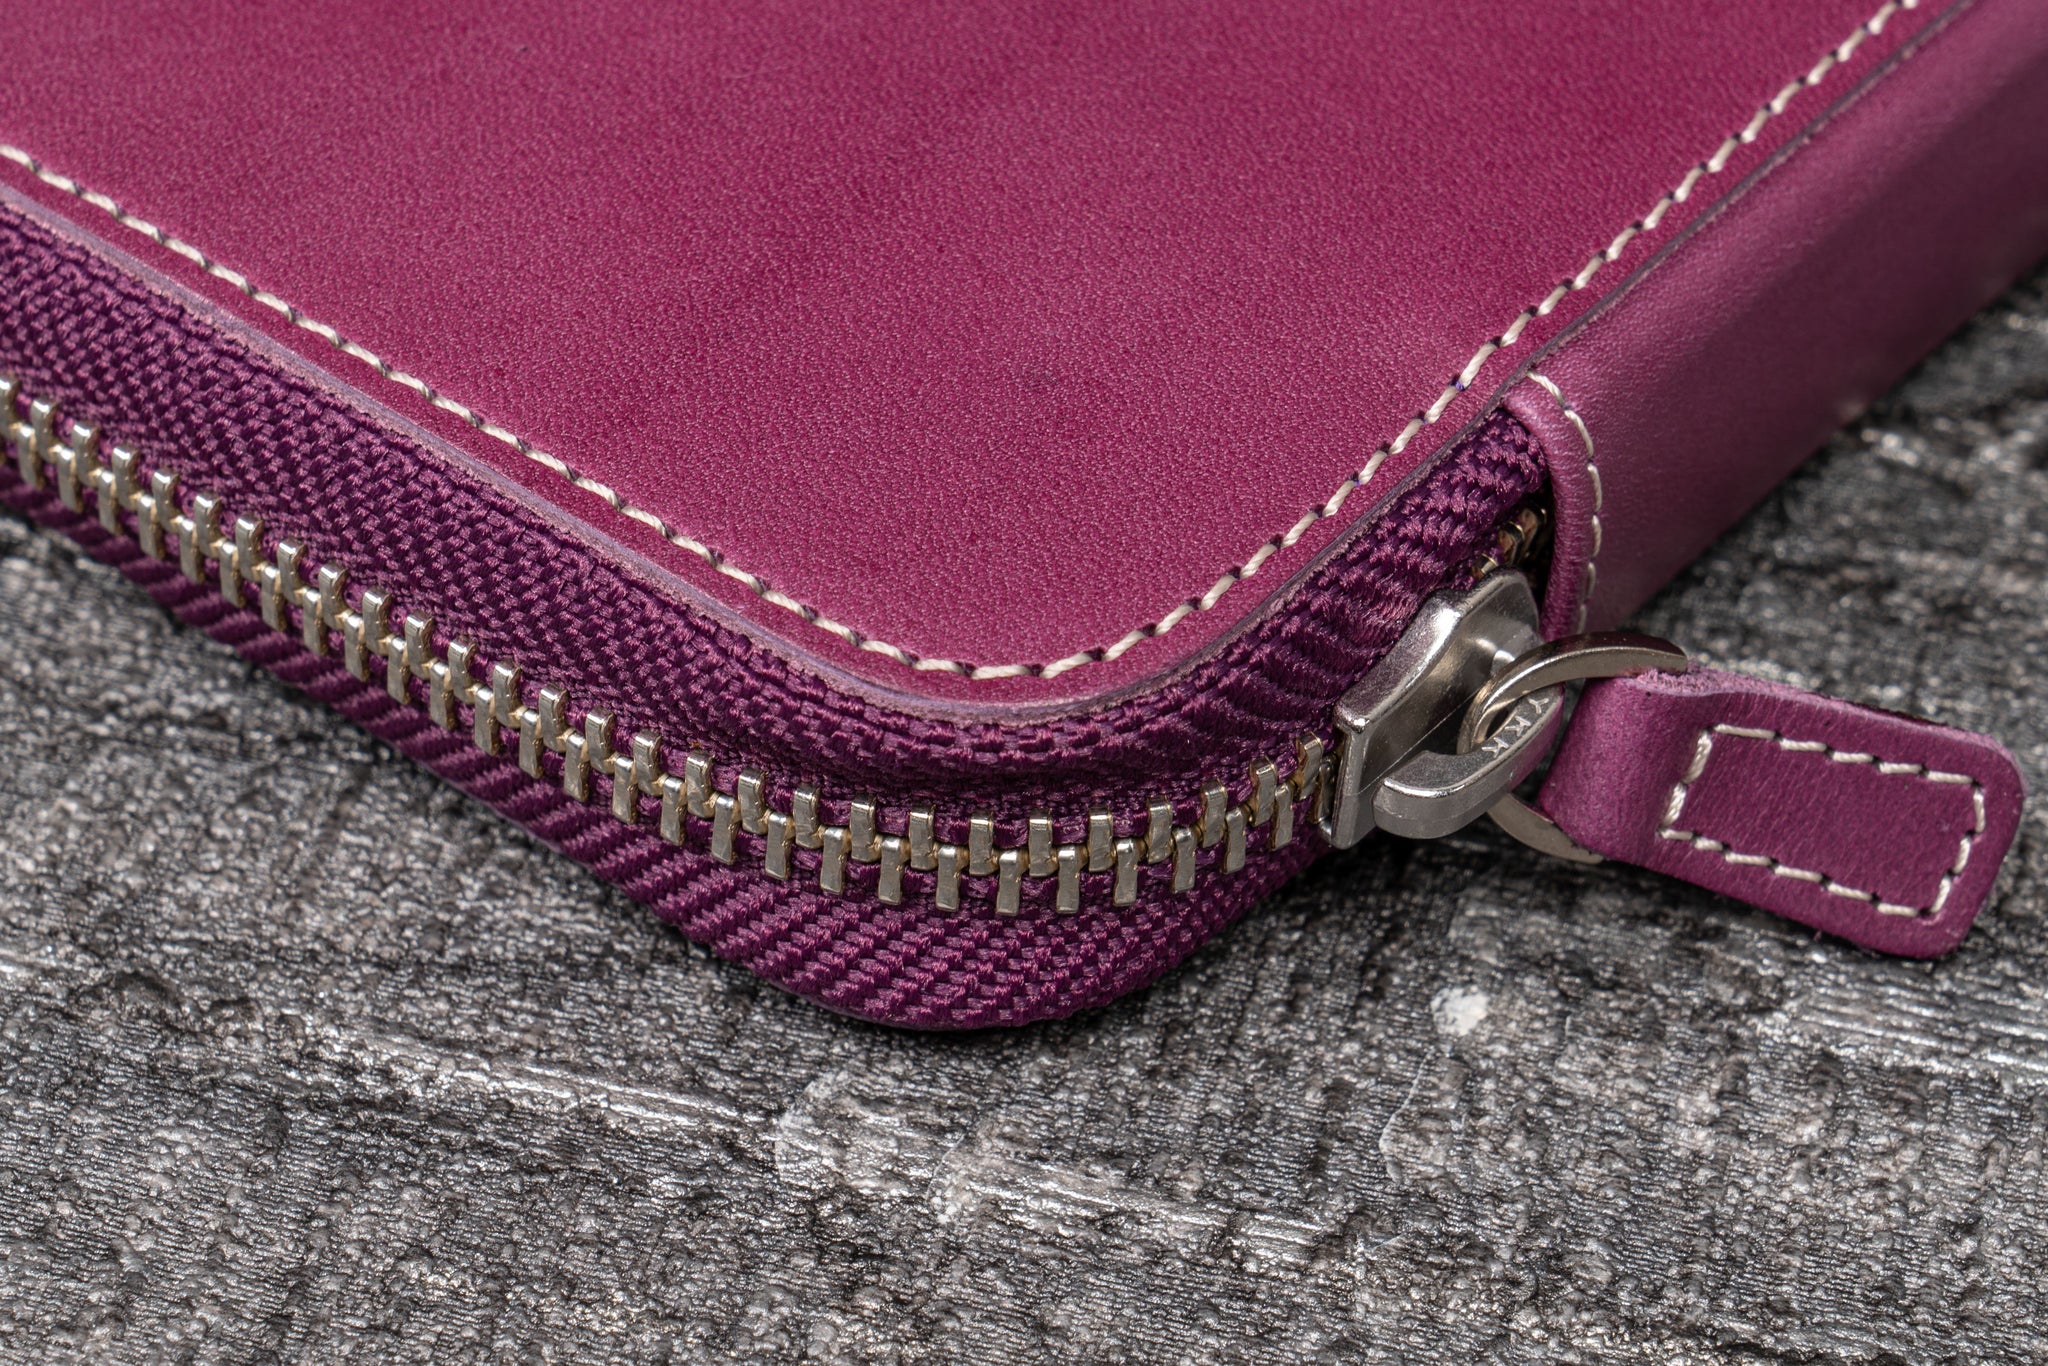 XLarge Zipper Leather Pencil Case - Purple